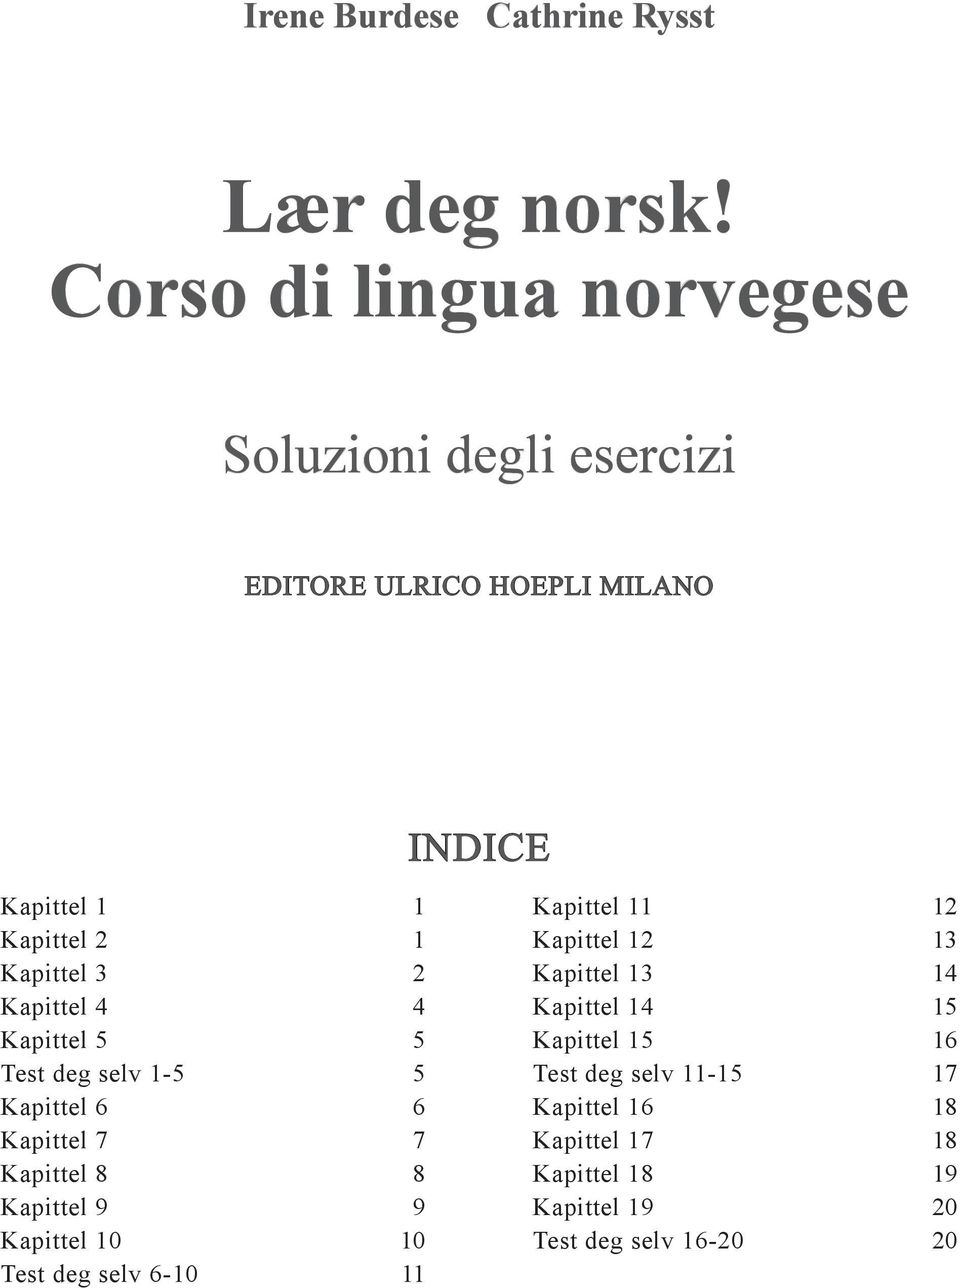 Lær deg norsk! Corso di lingua norvegese - PDF Free Download